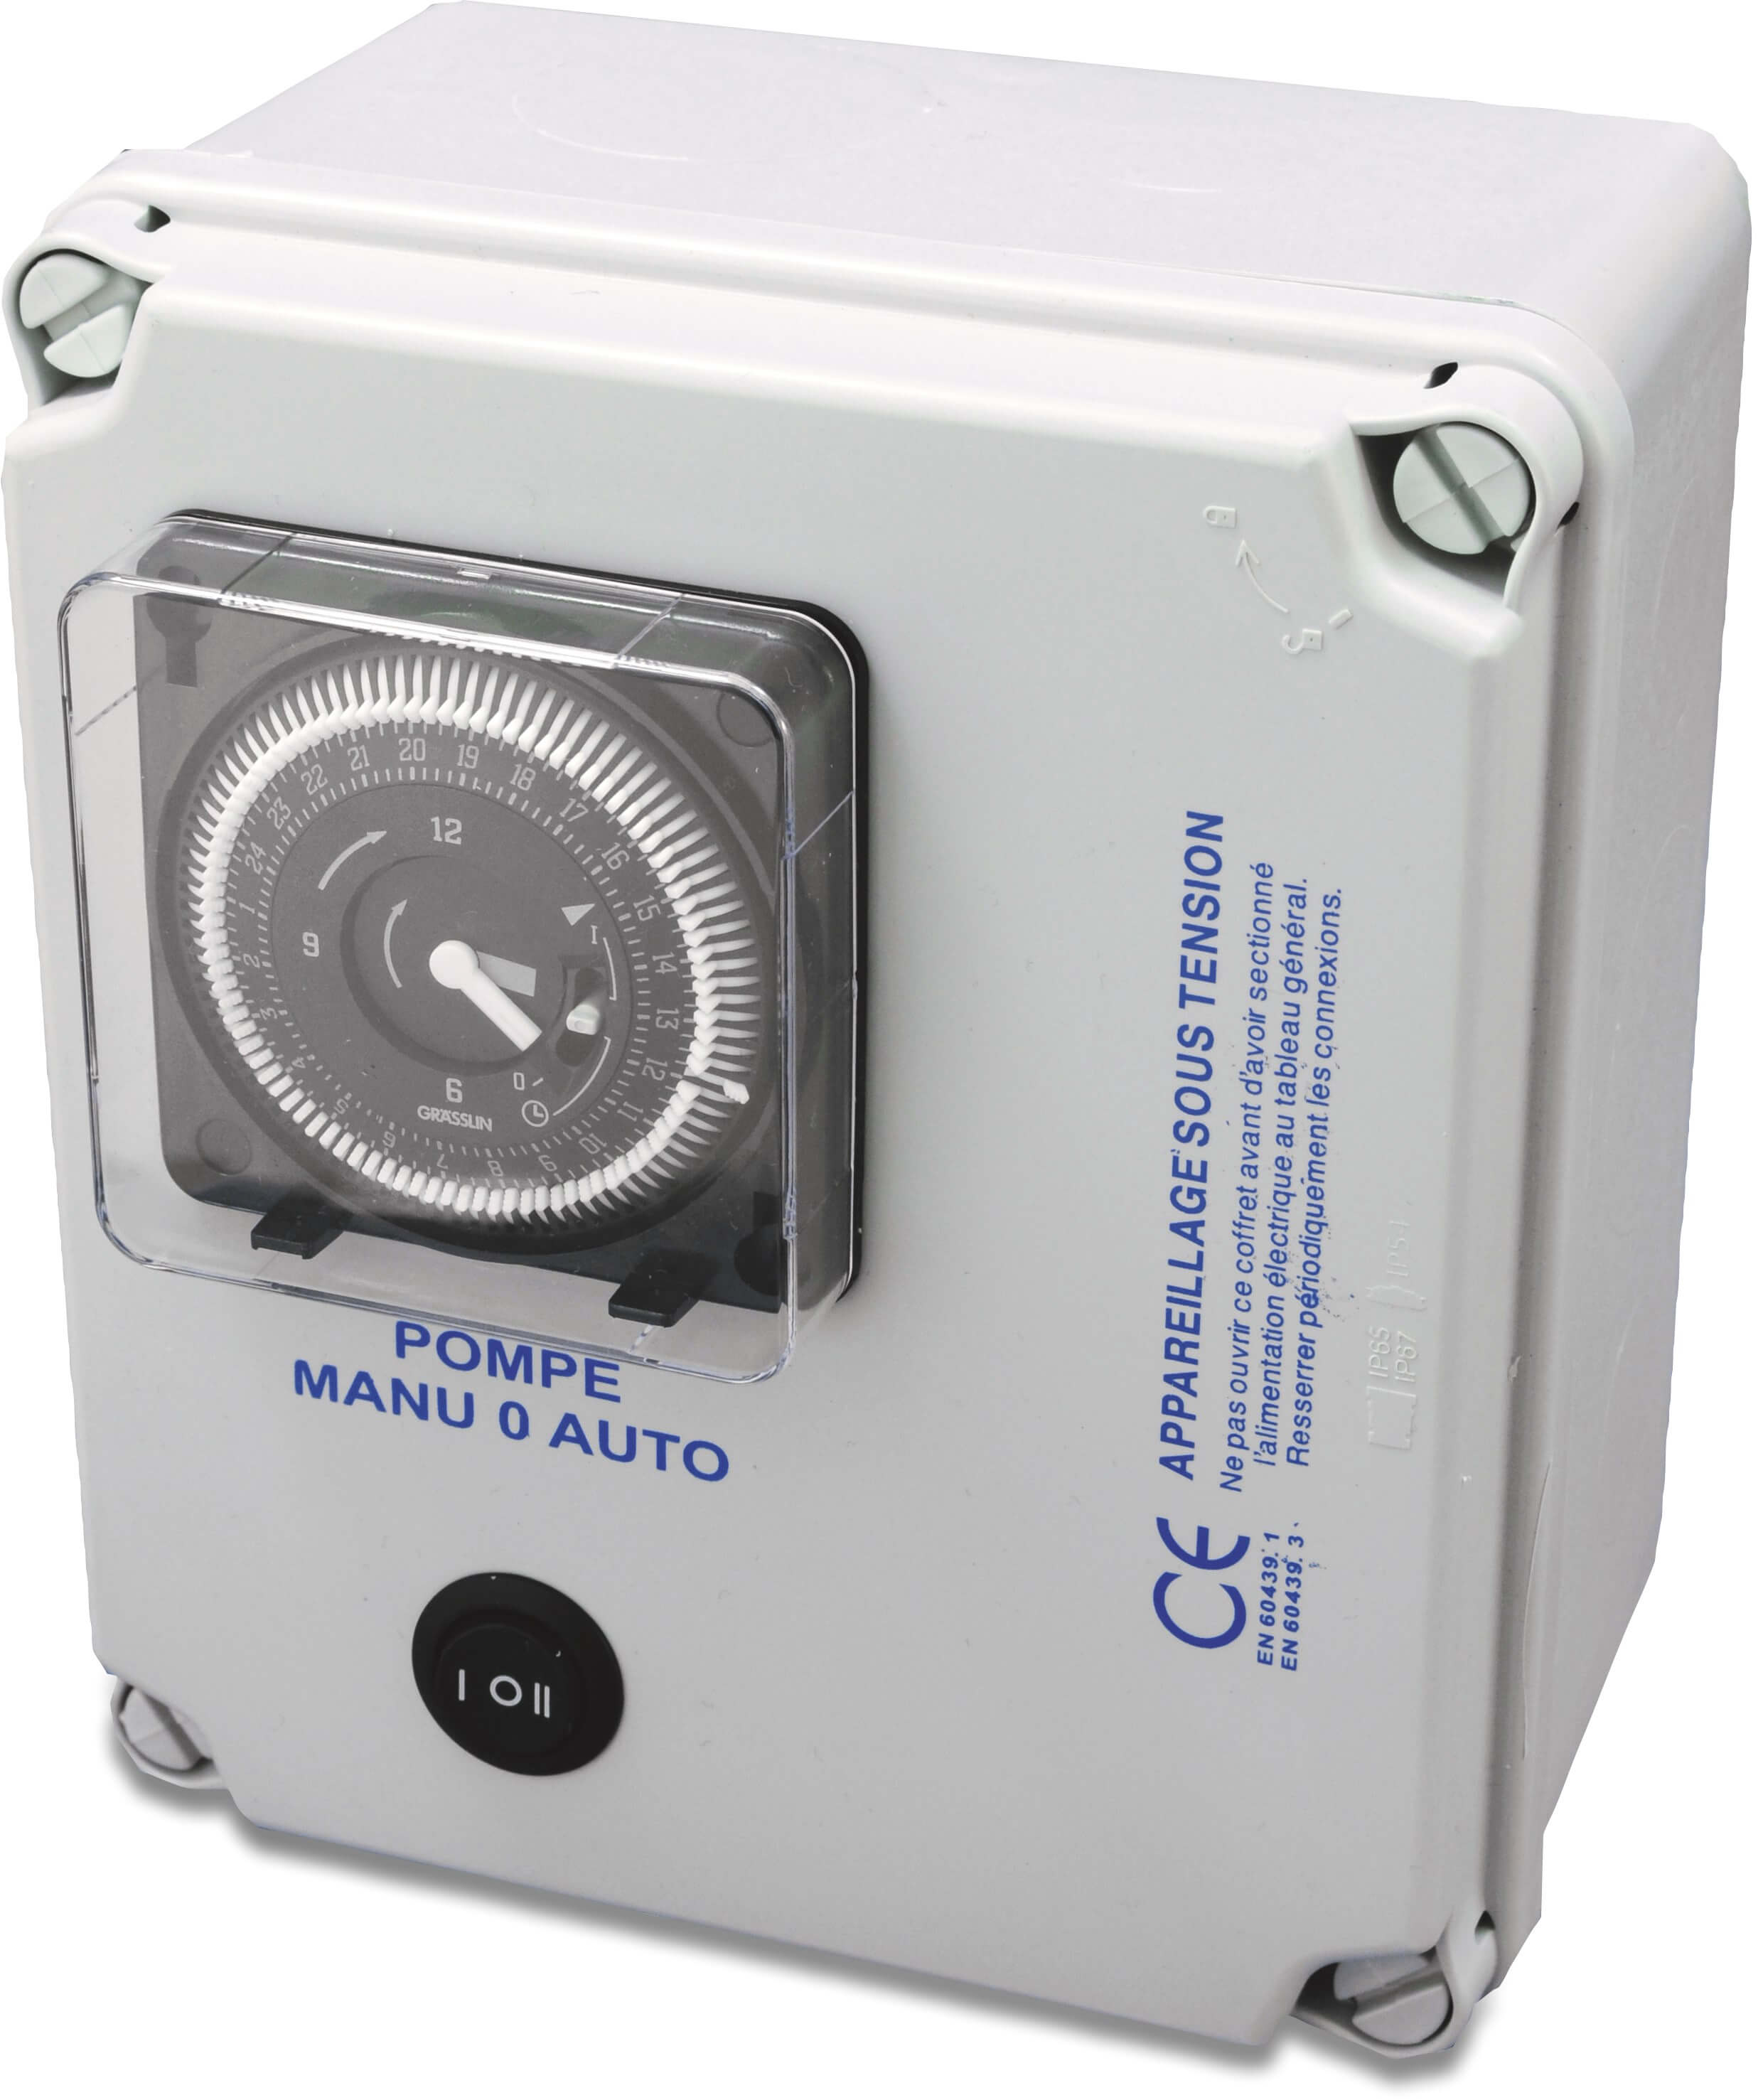 Jednostka kontrolna filtracji 6.3-10A 230/400VAC type DFH